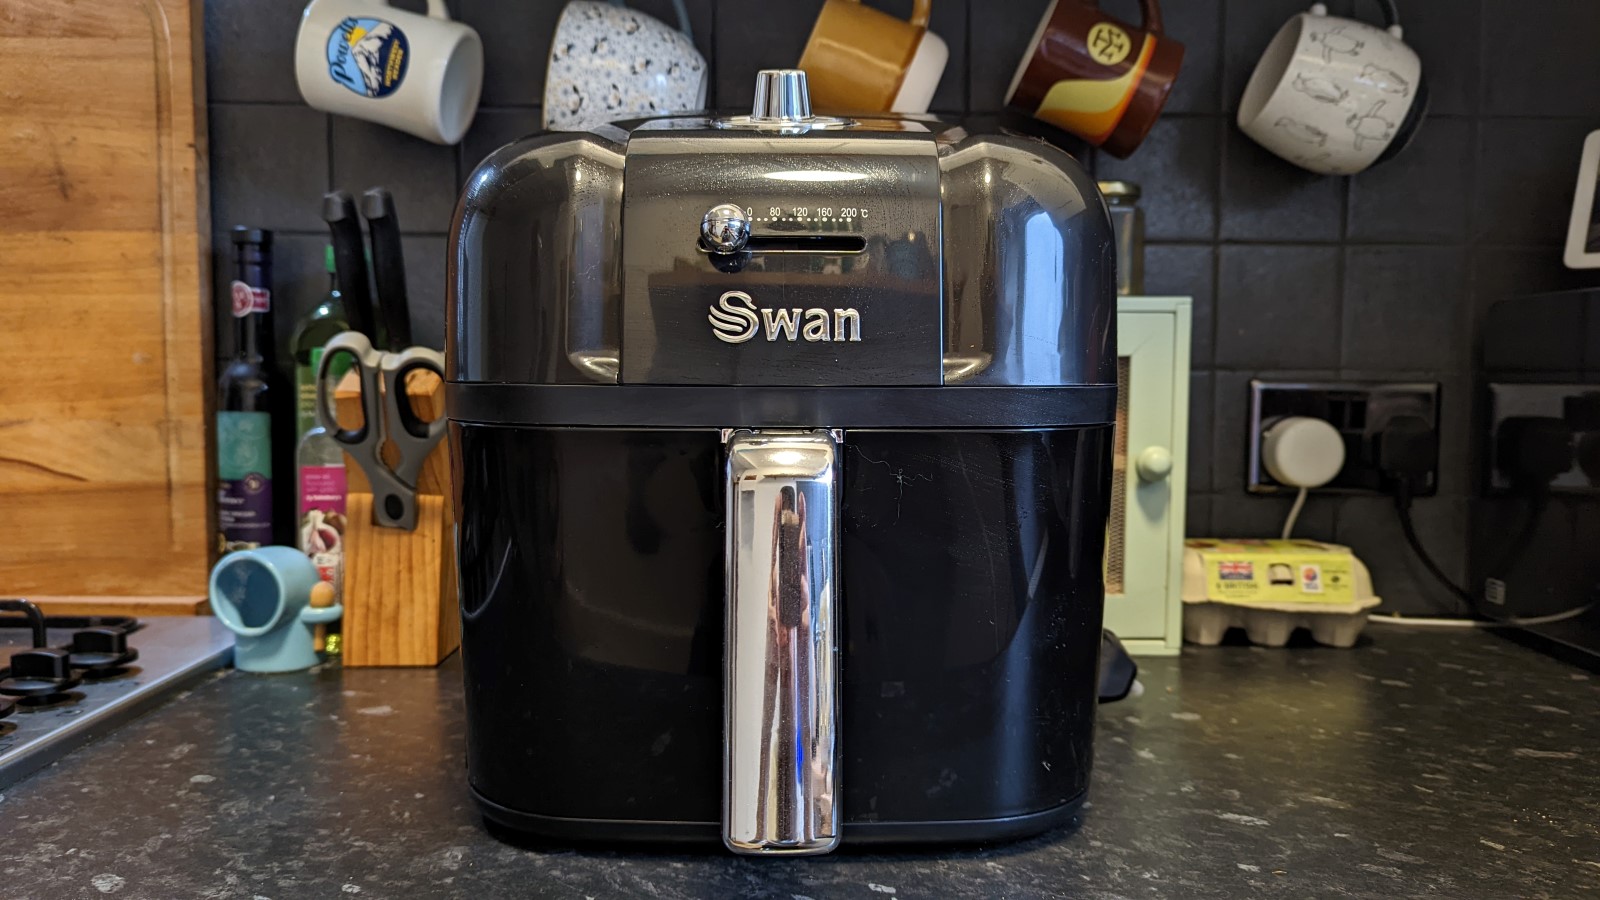  Swan Retro Air Fryer - Best budget air fryer